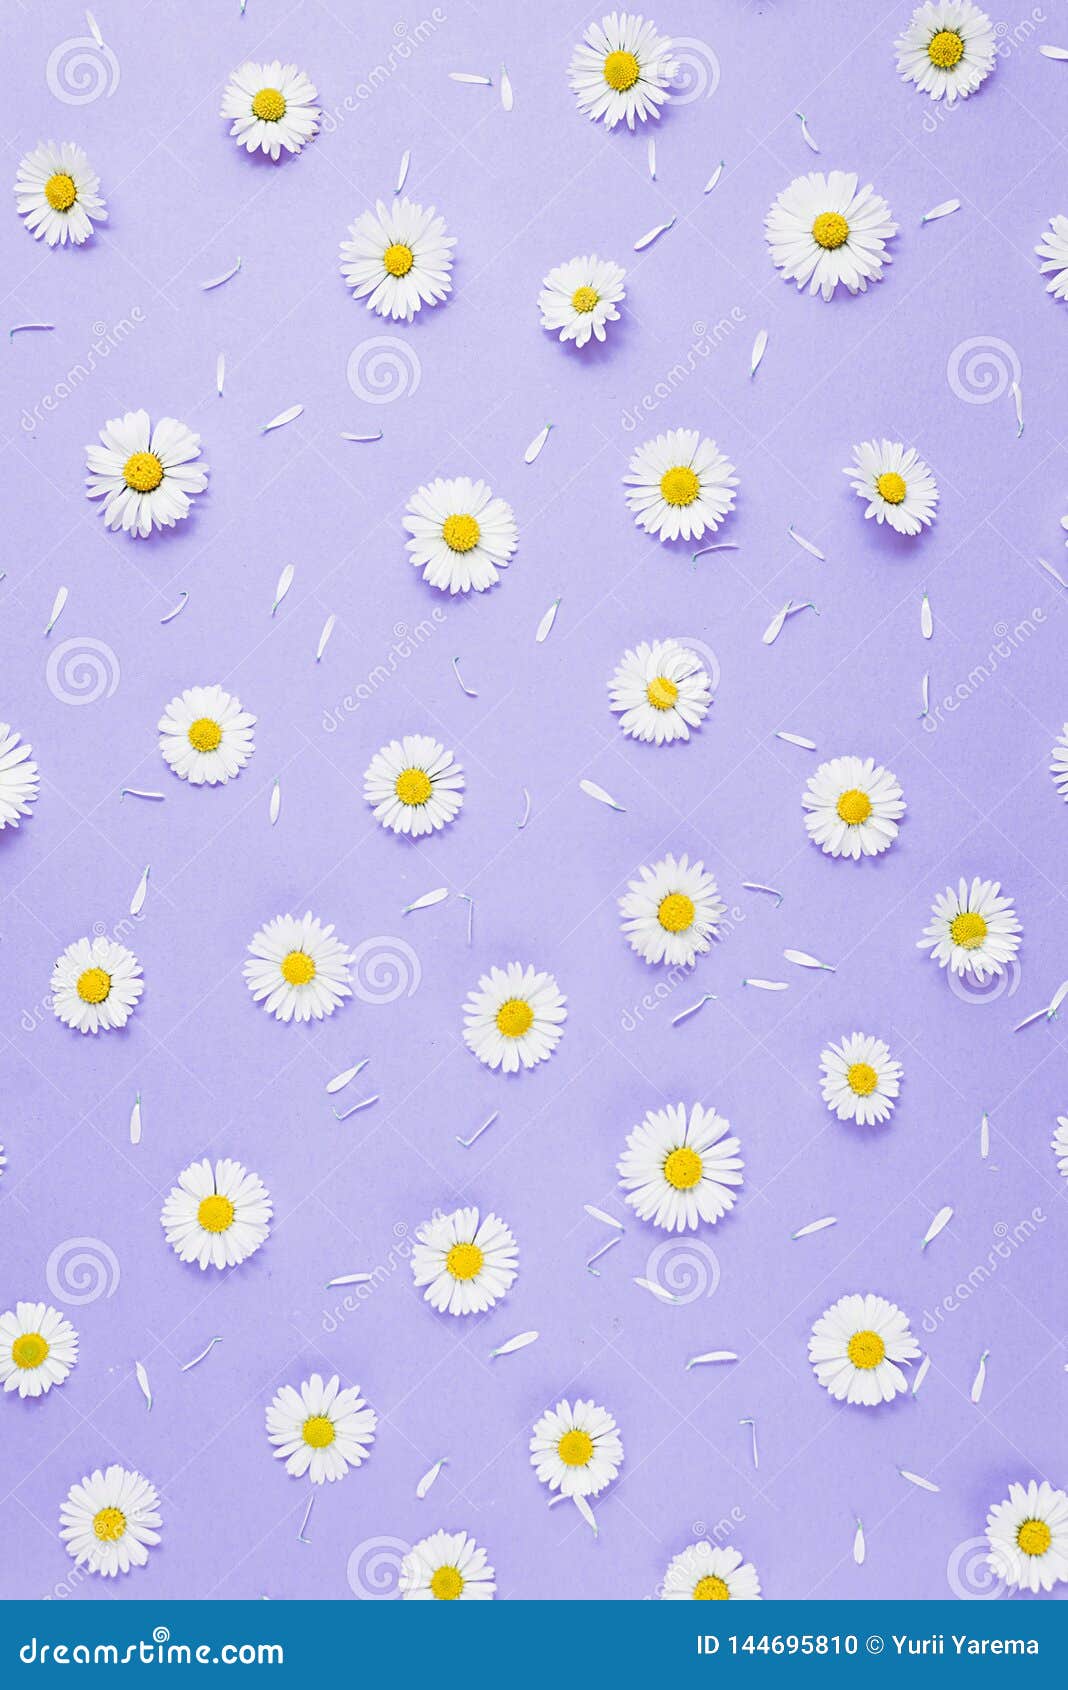 Pastel Purple Wallpapers  Top 30 Best Pastel Purple Wallpapers Download